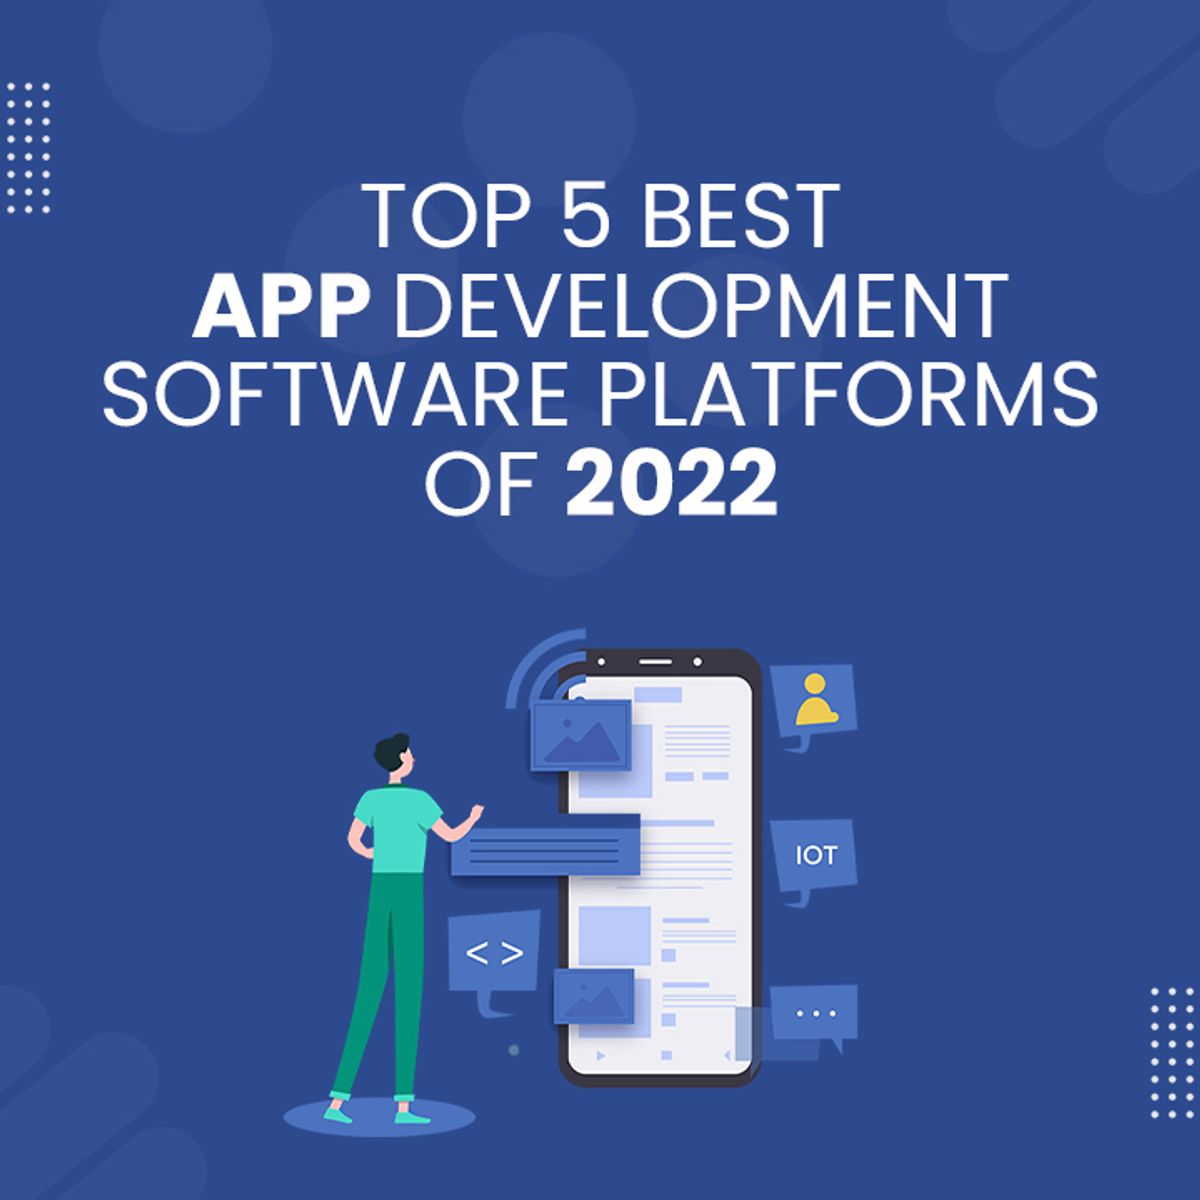 Top 5 Best App Development Software Platforms of 2022